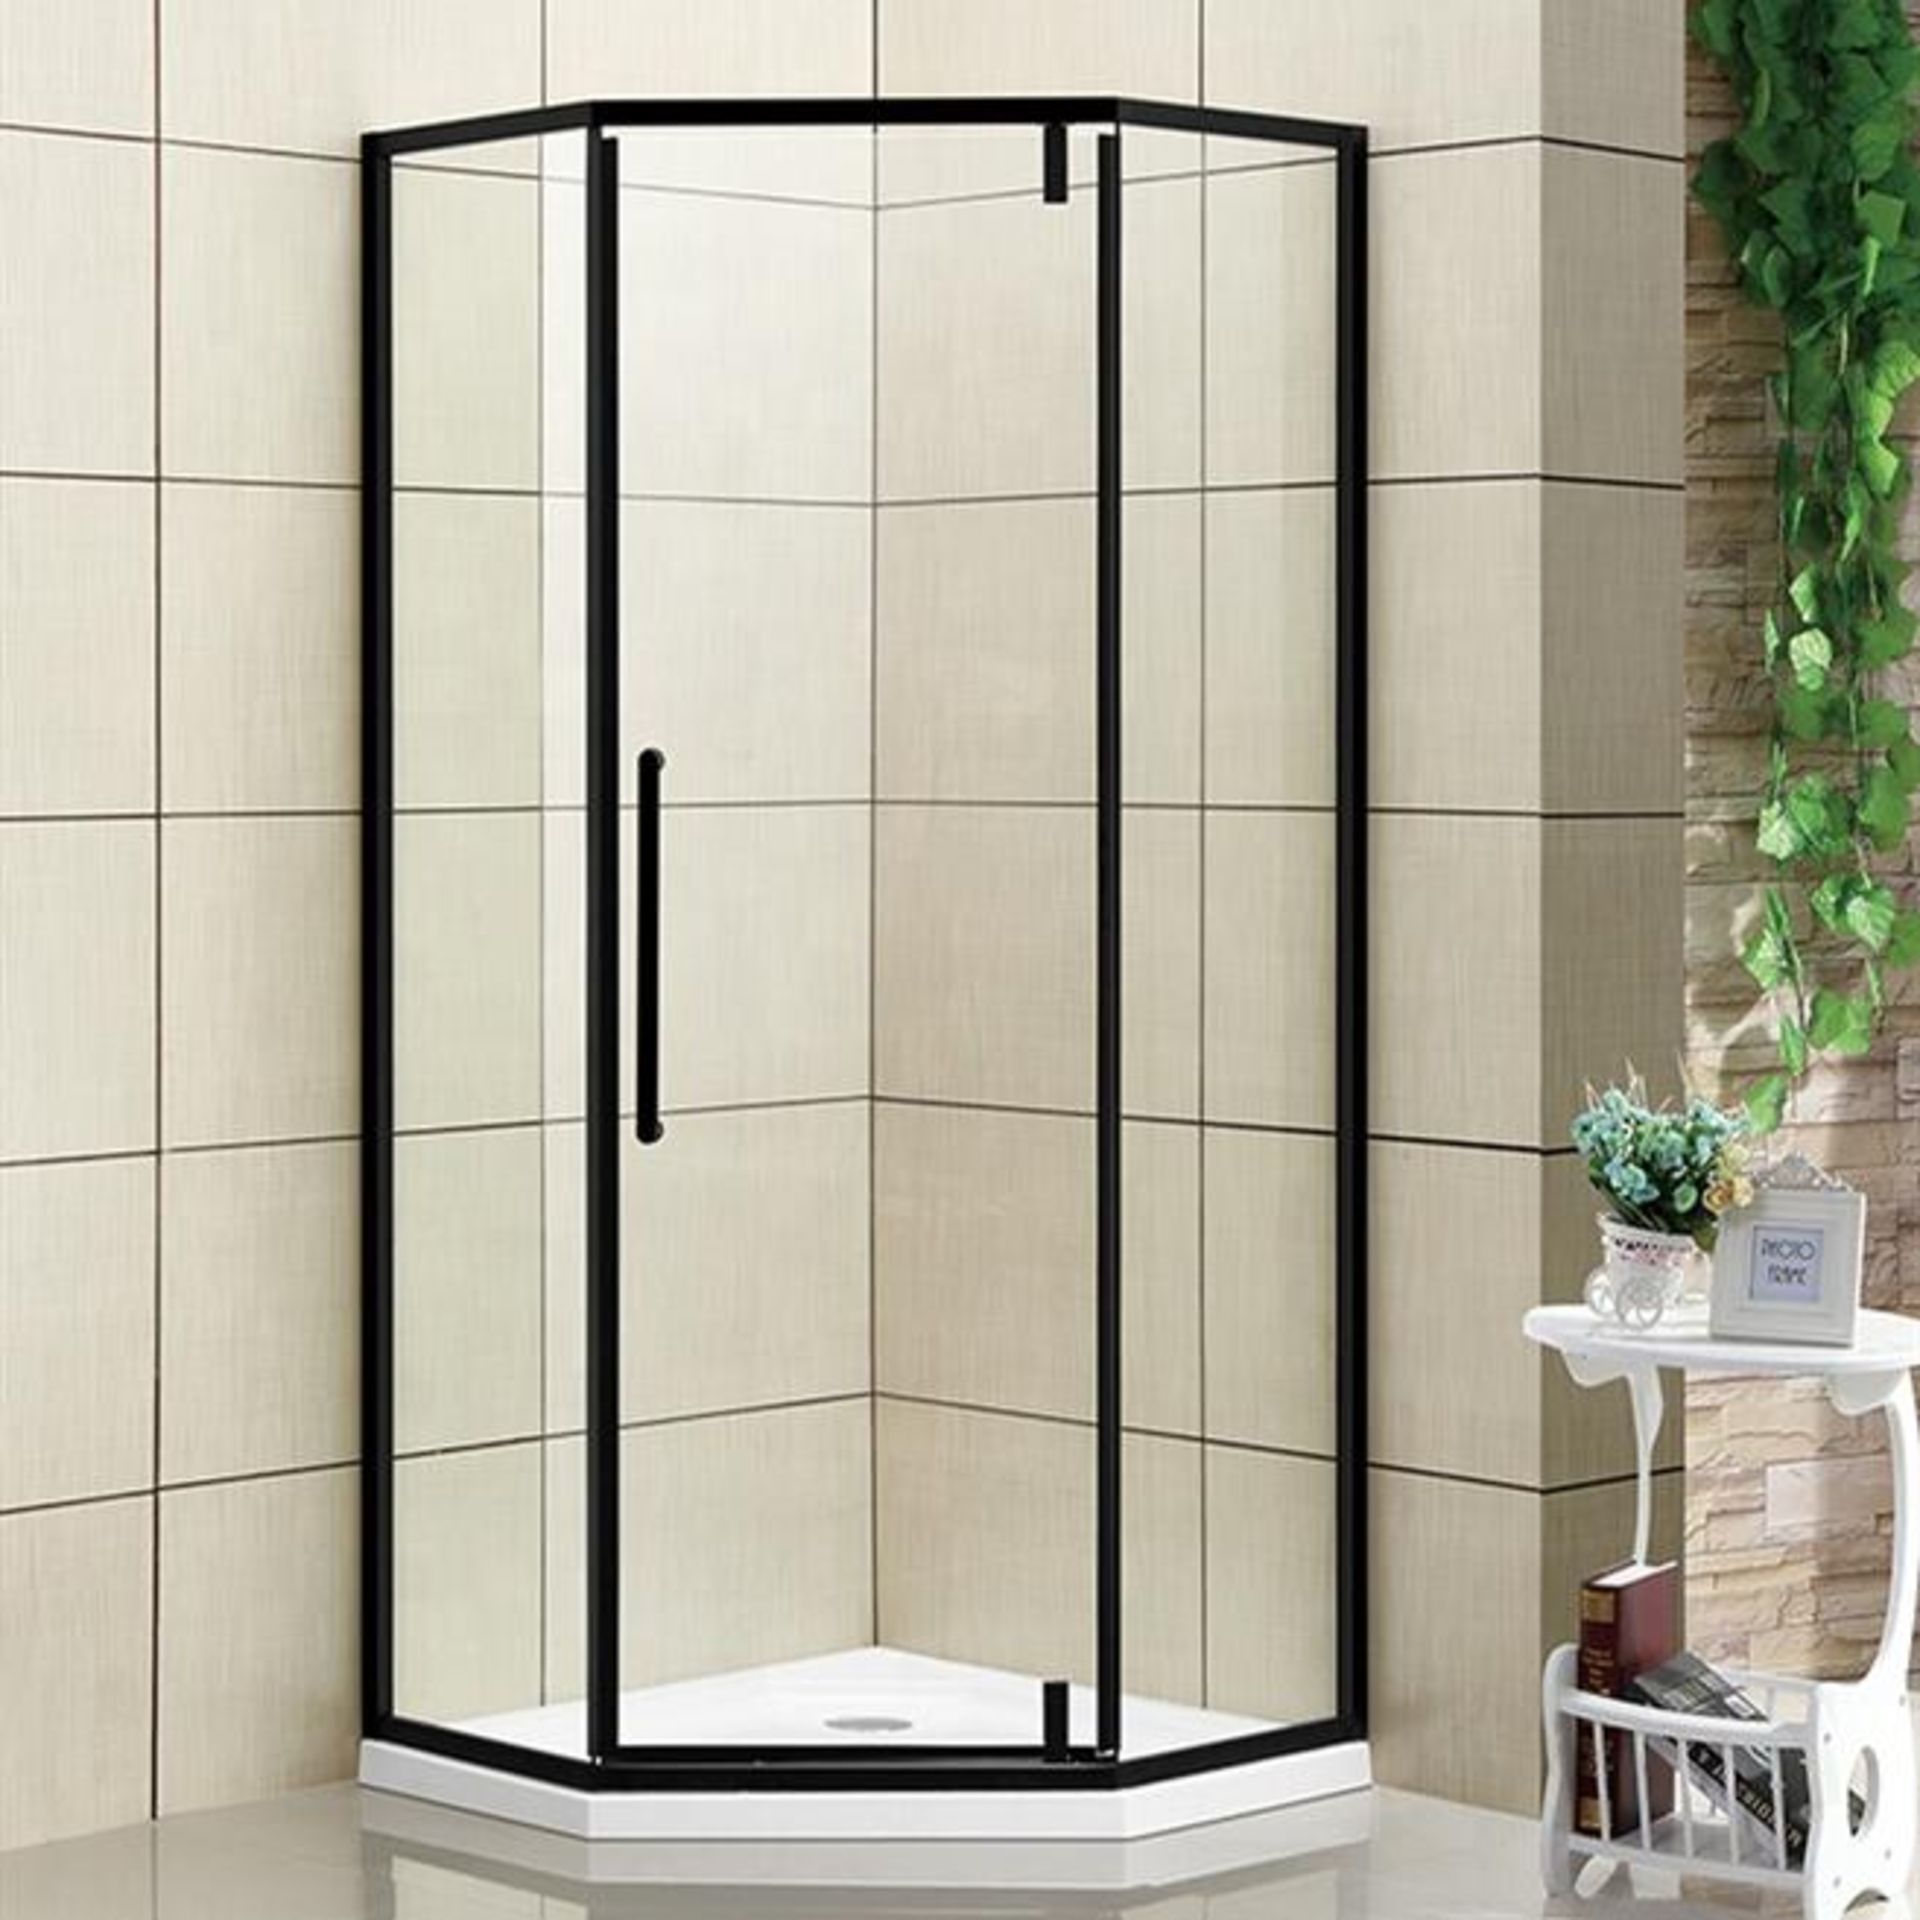 1 x Premium Quality Diamond-Shaped Shower Enclosure With Hinged Door - Frame Colour: Matt Black - Di